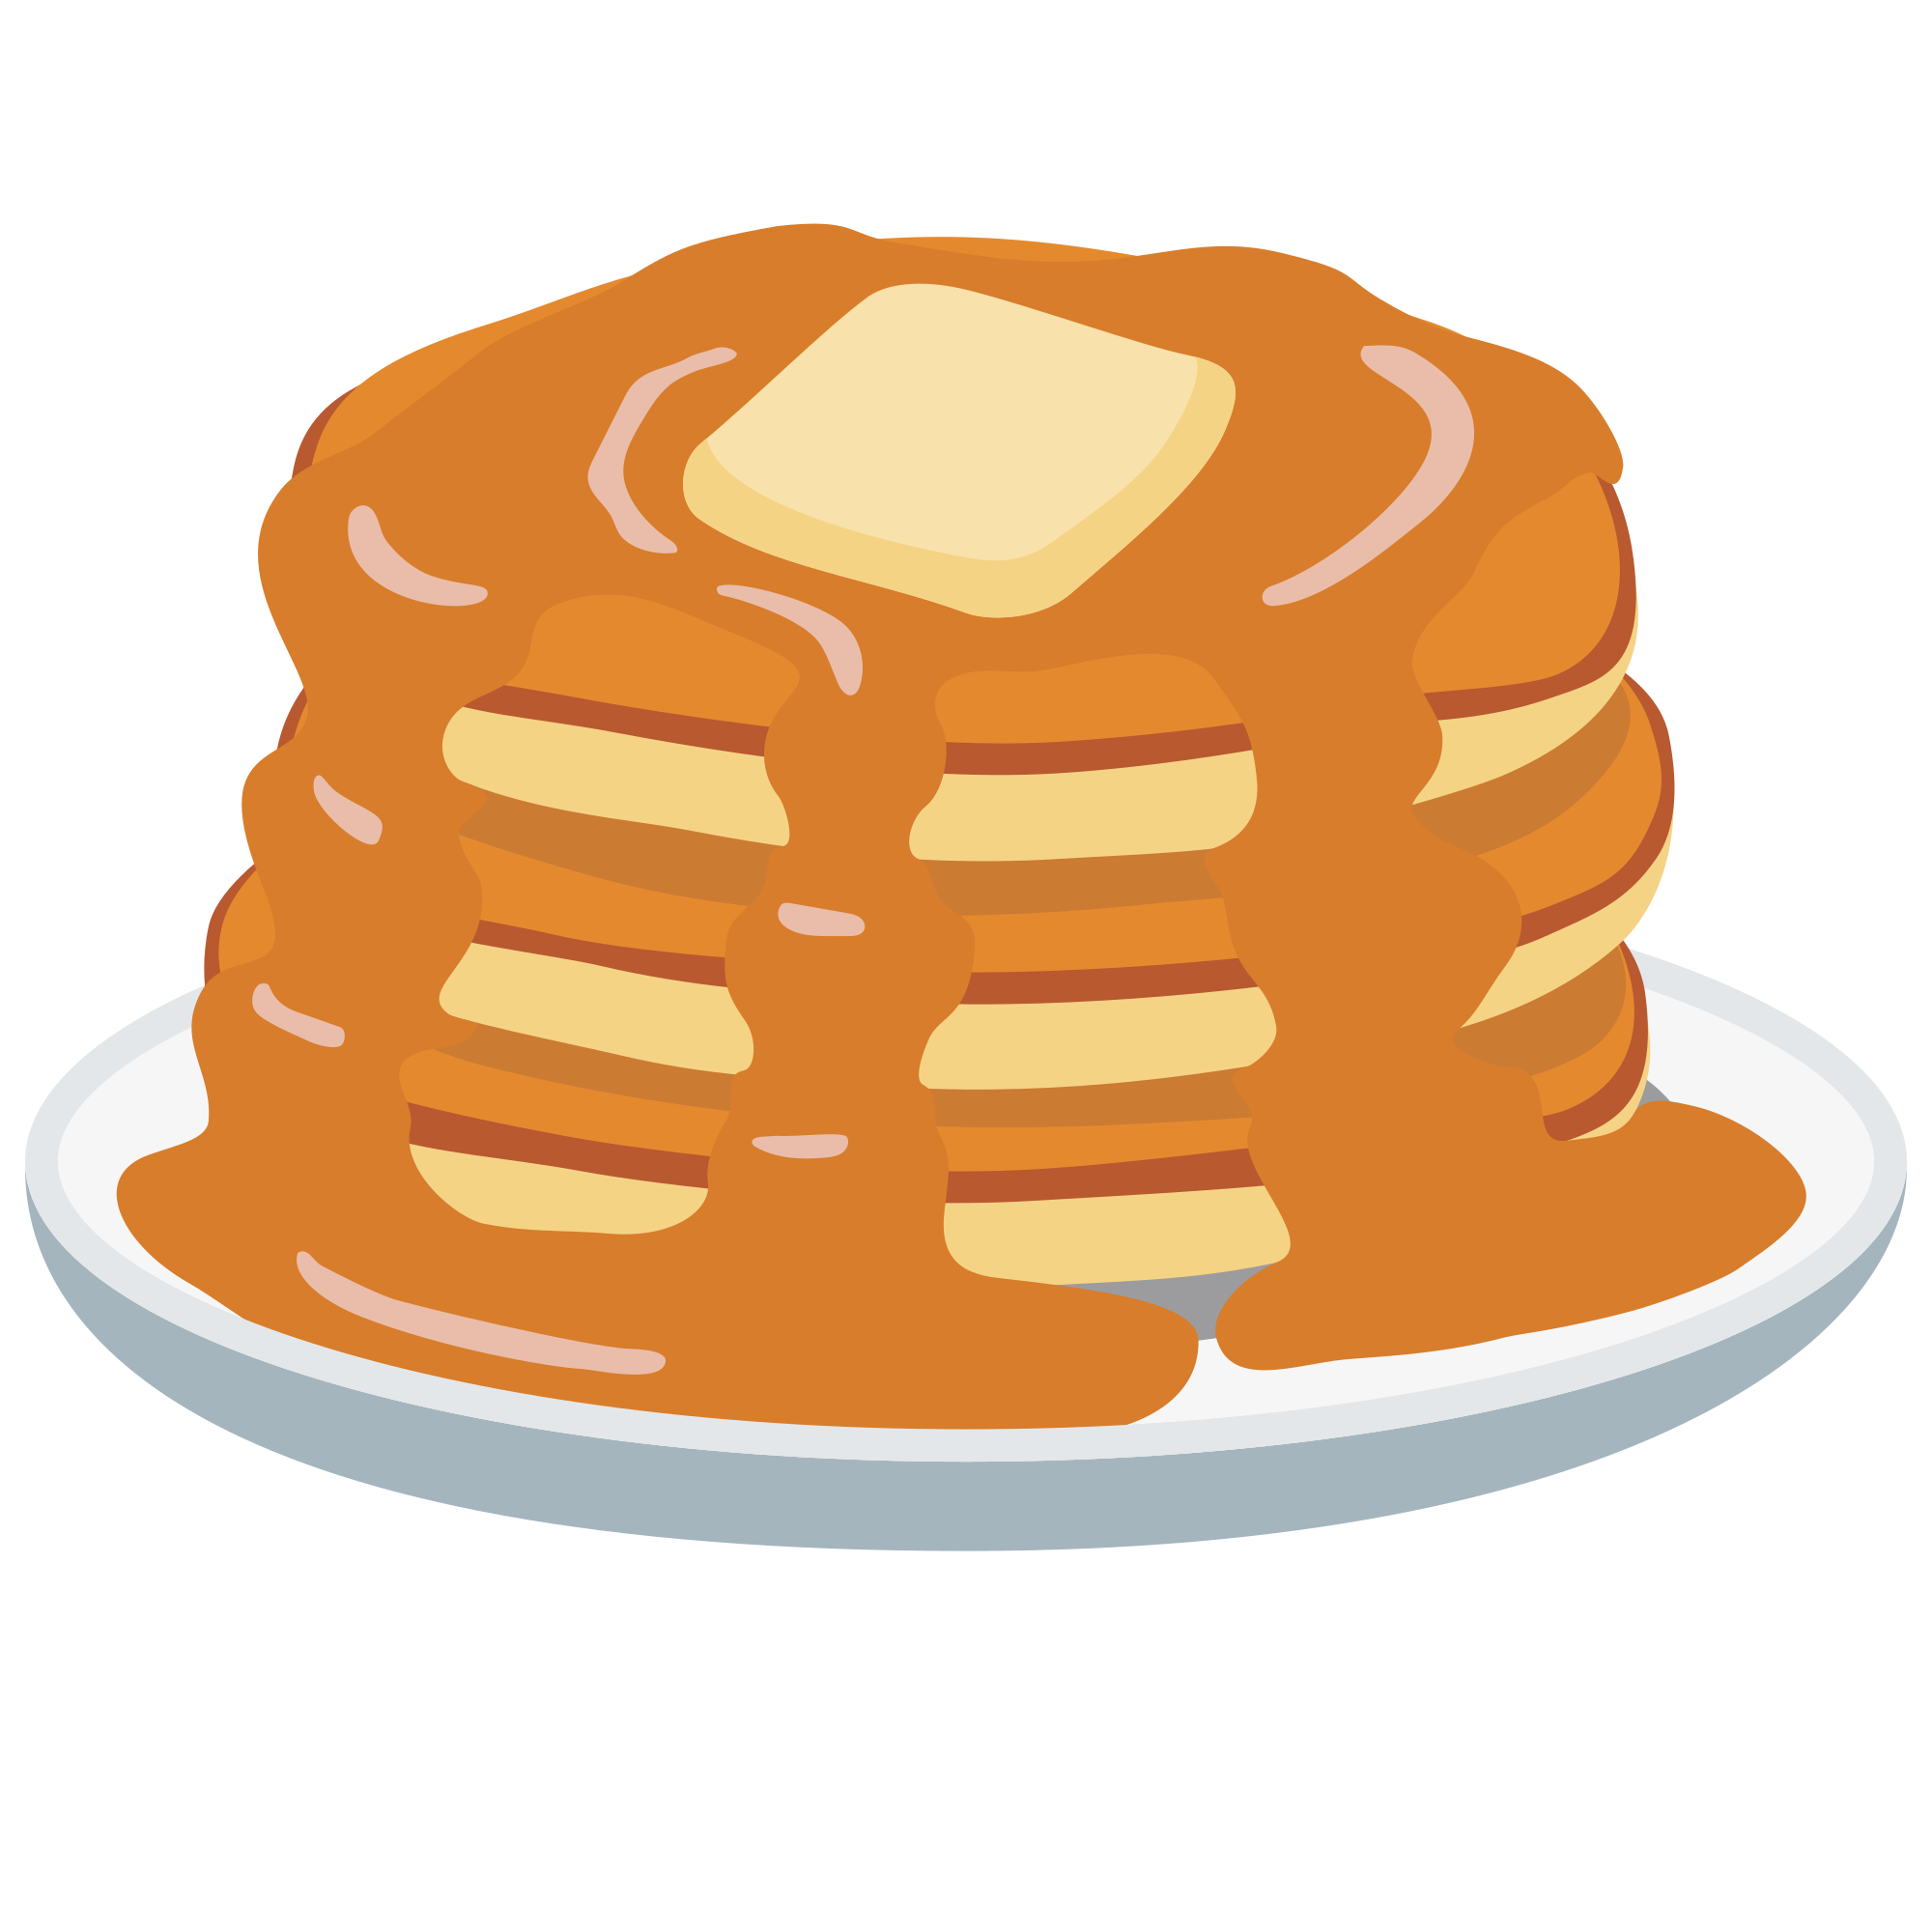 Pancakes svg frames illustrations. Pancake clipart breakfast item